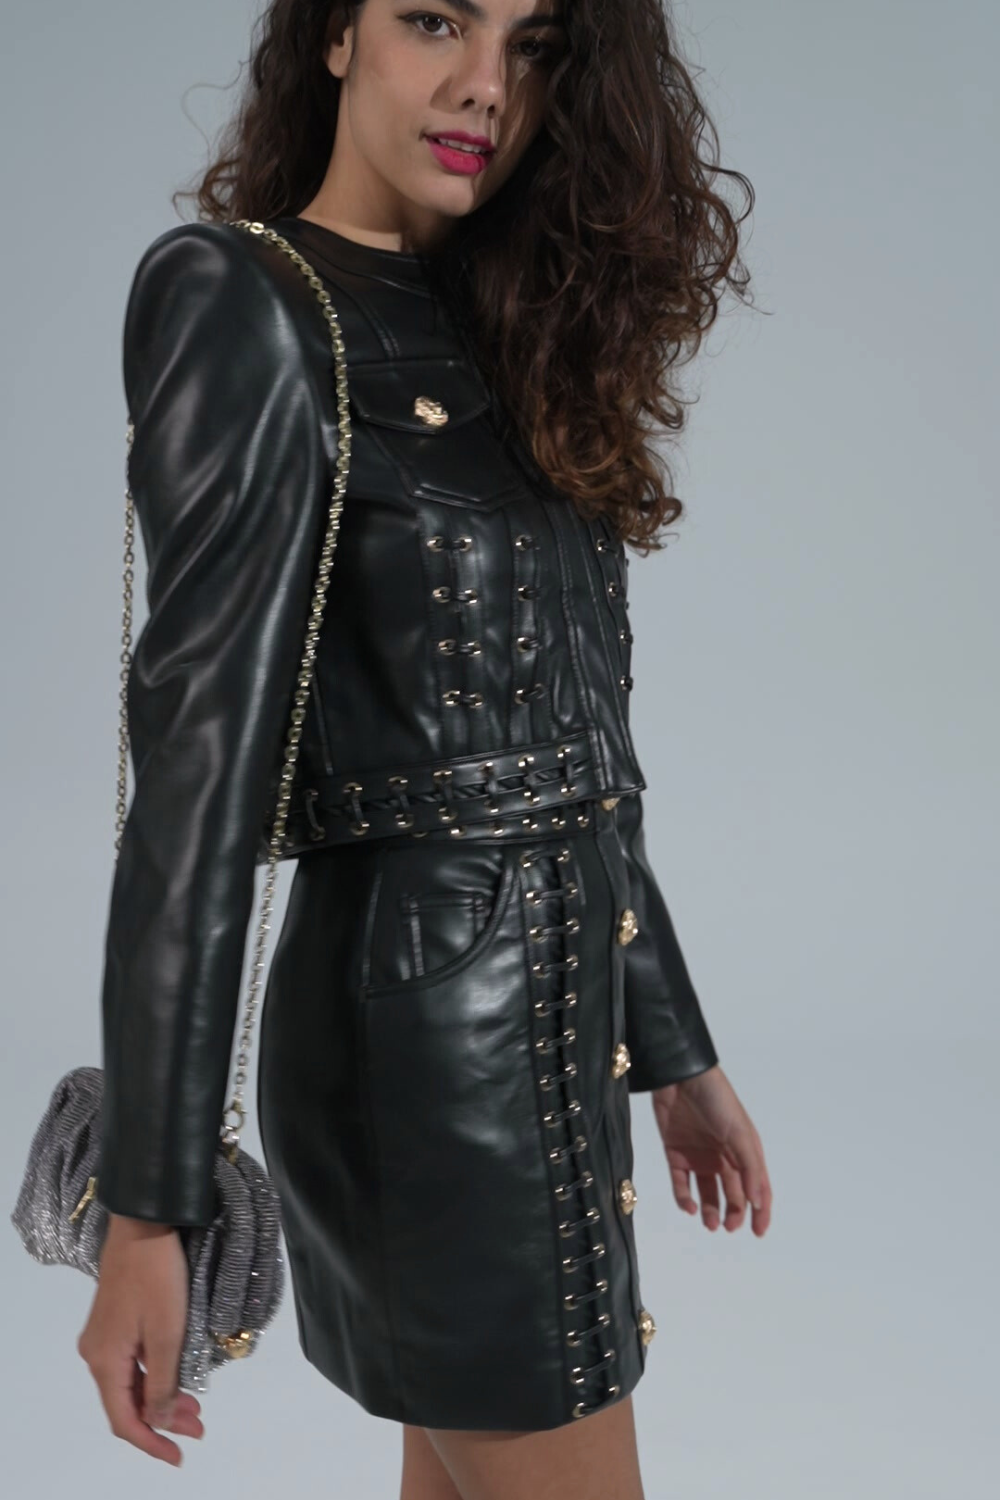 Punky Faux Leather Jacket/Skirt